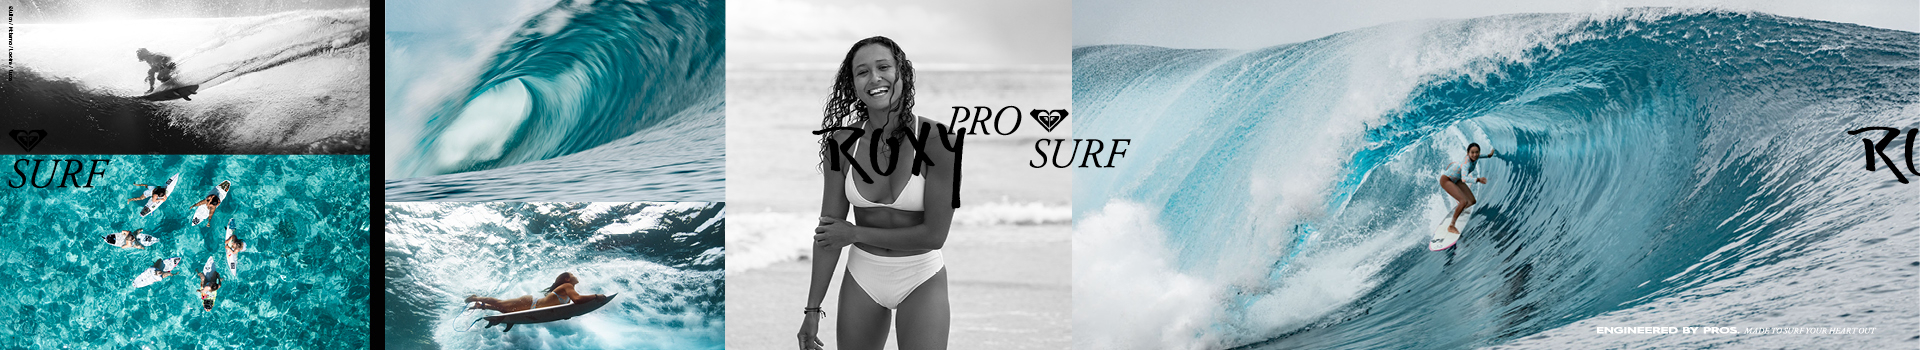 roxy pro surf